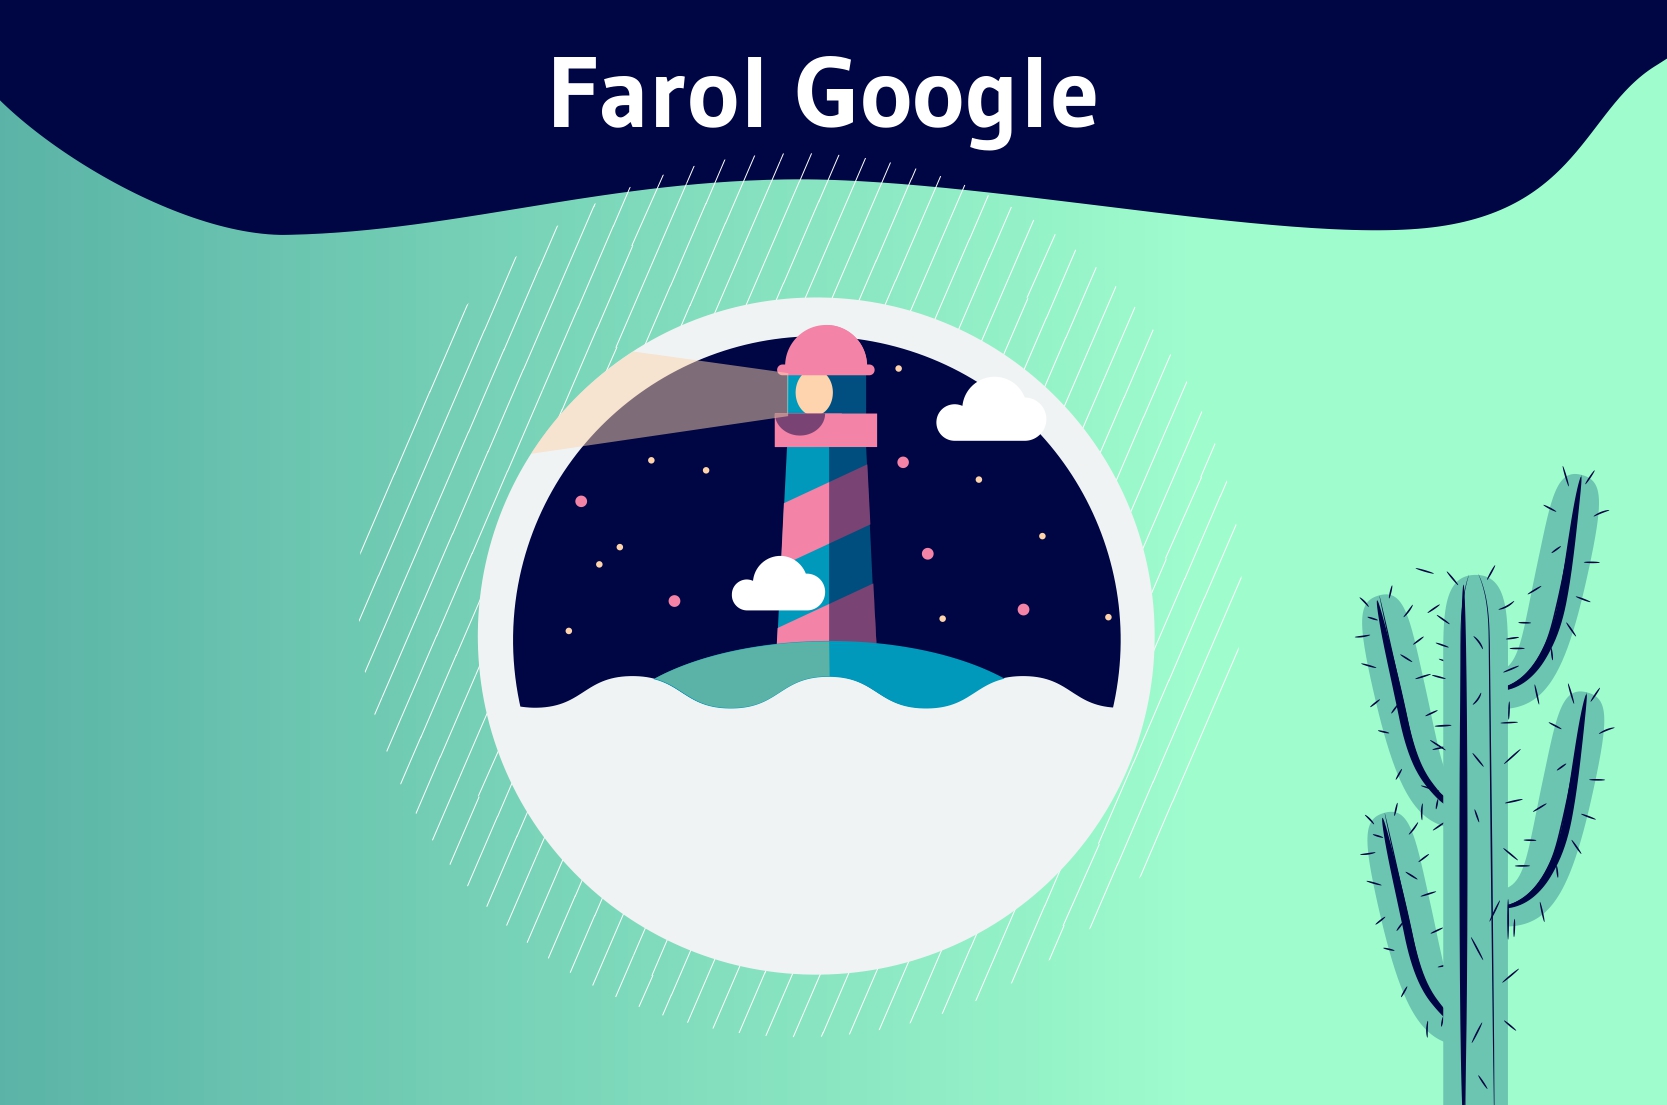 Farol Google